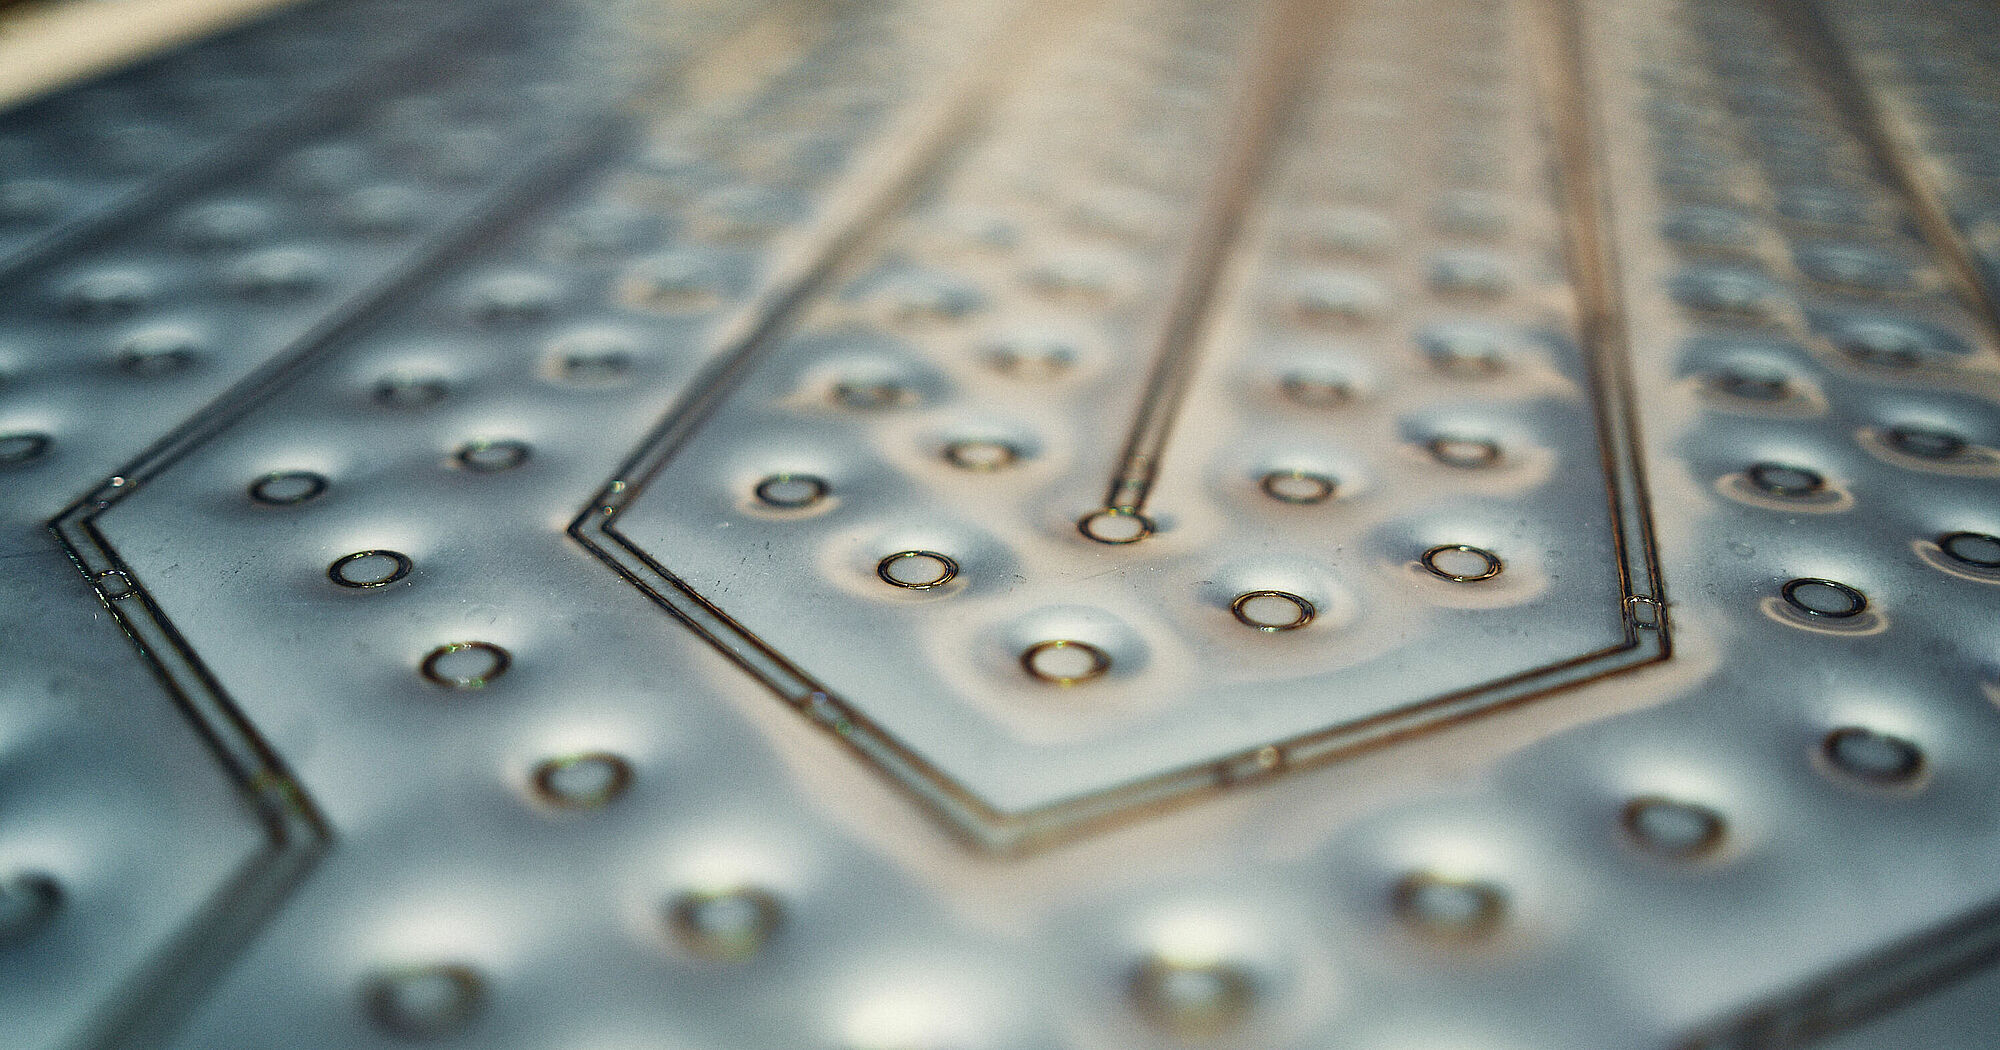 Close-up Shot of Cut Metal Shiny Silver Sheets Forming an Abstract